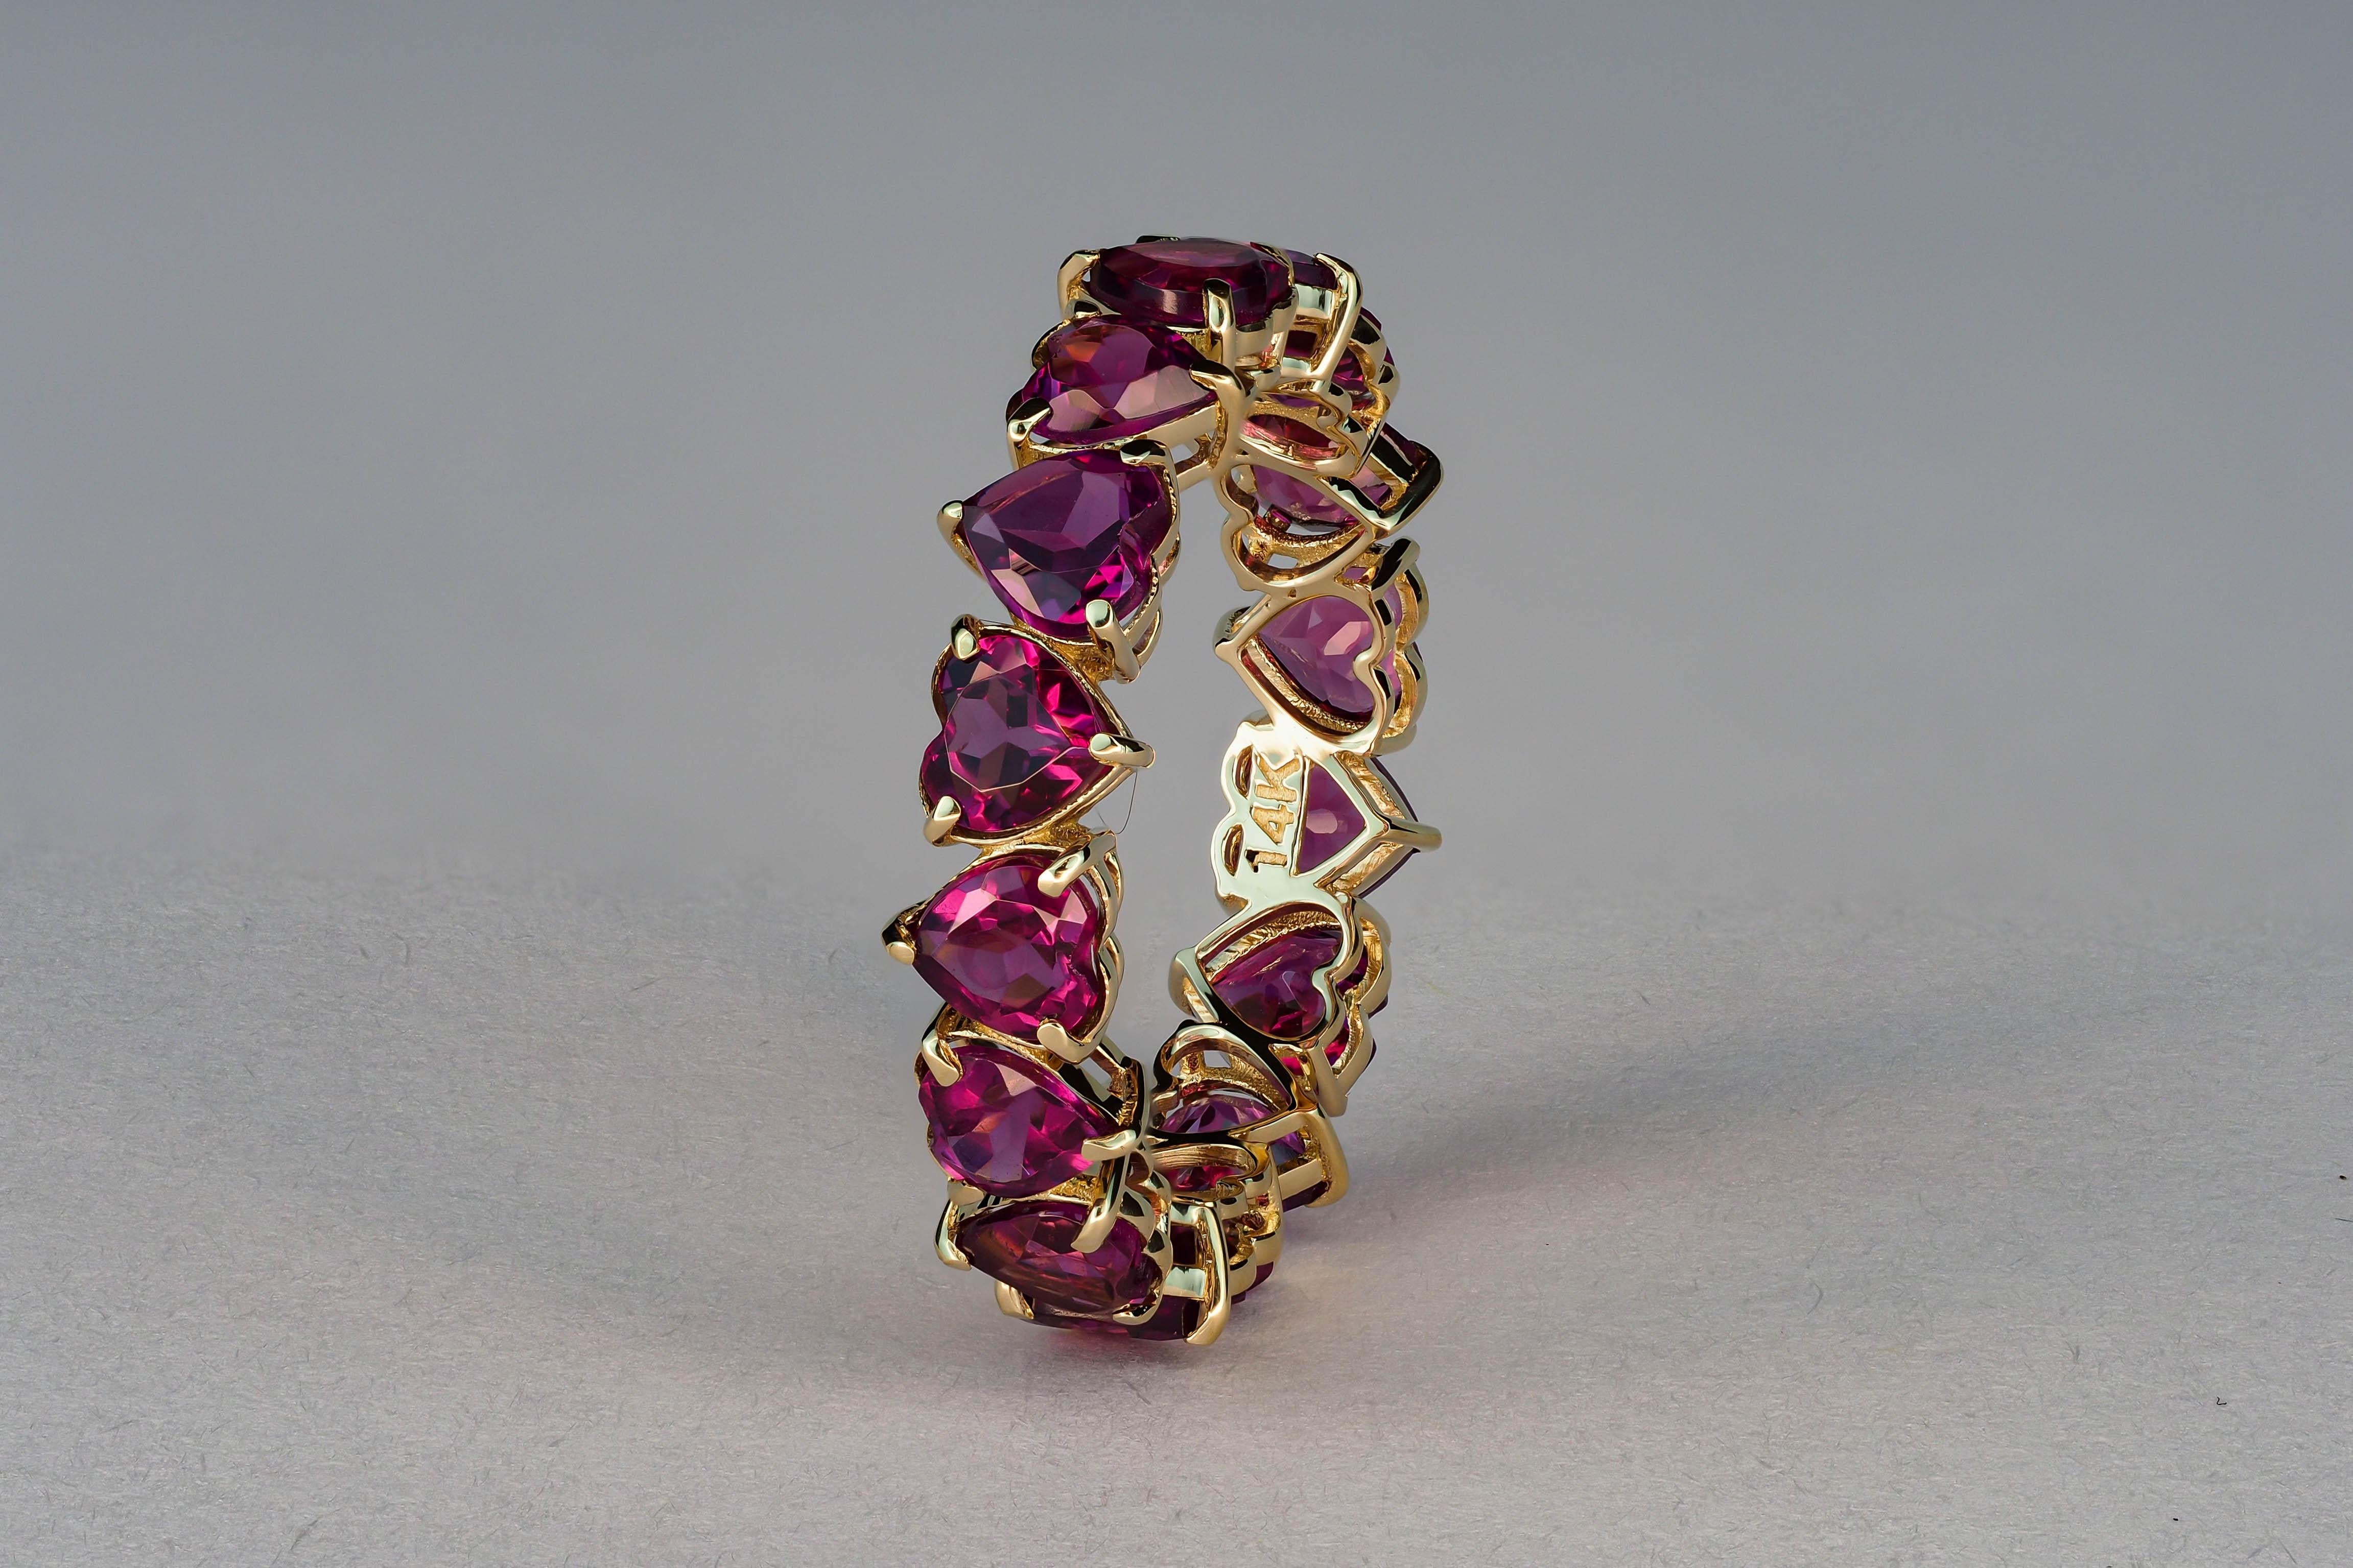 For Sale:  Heart garnet ring. 14k Gold Heart Eternity Ring with Heart Garnets! 10